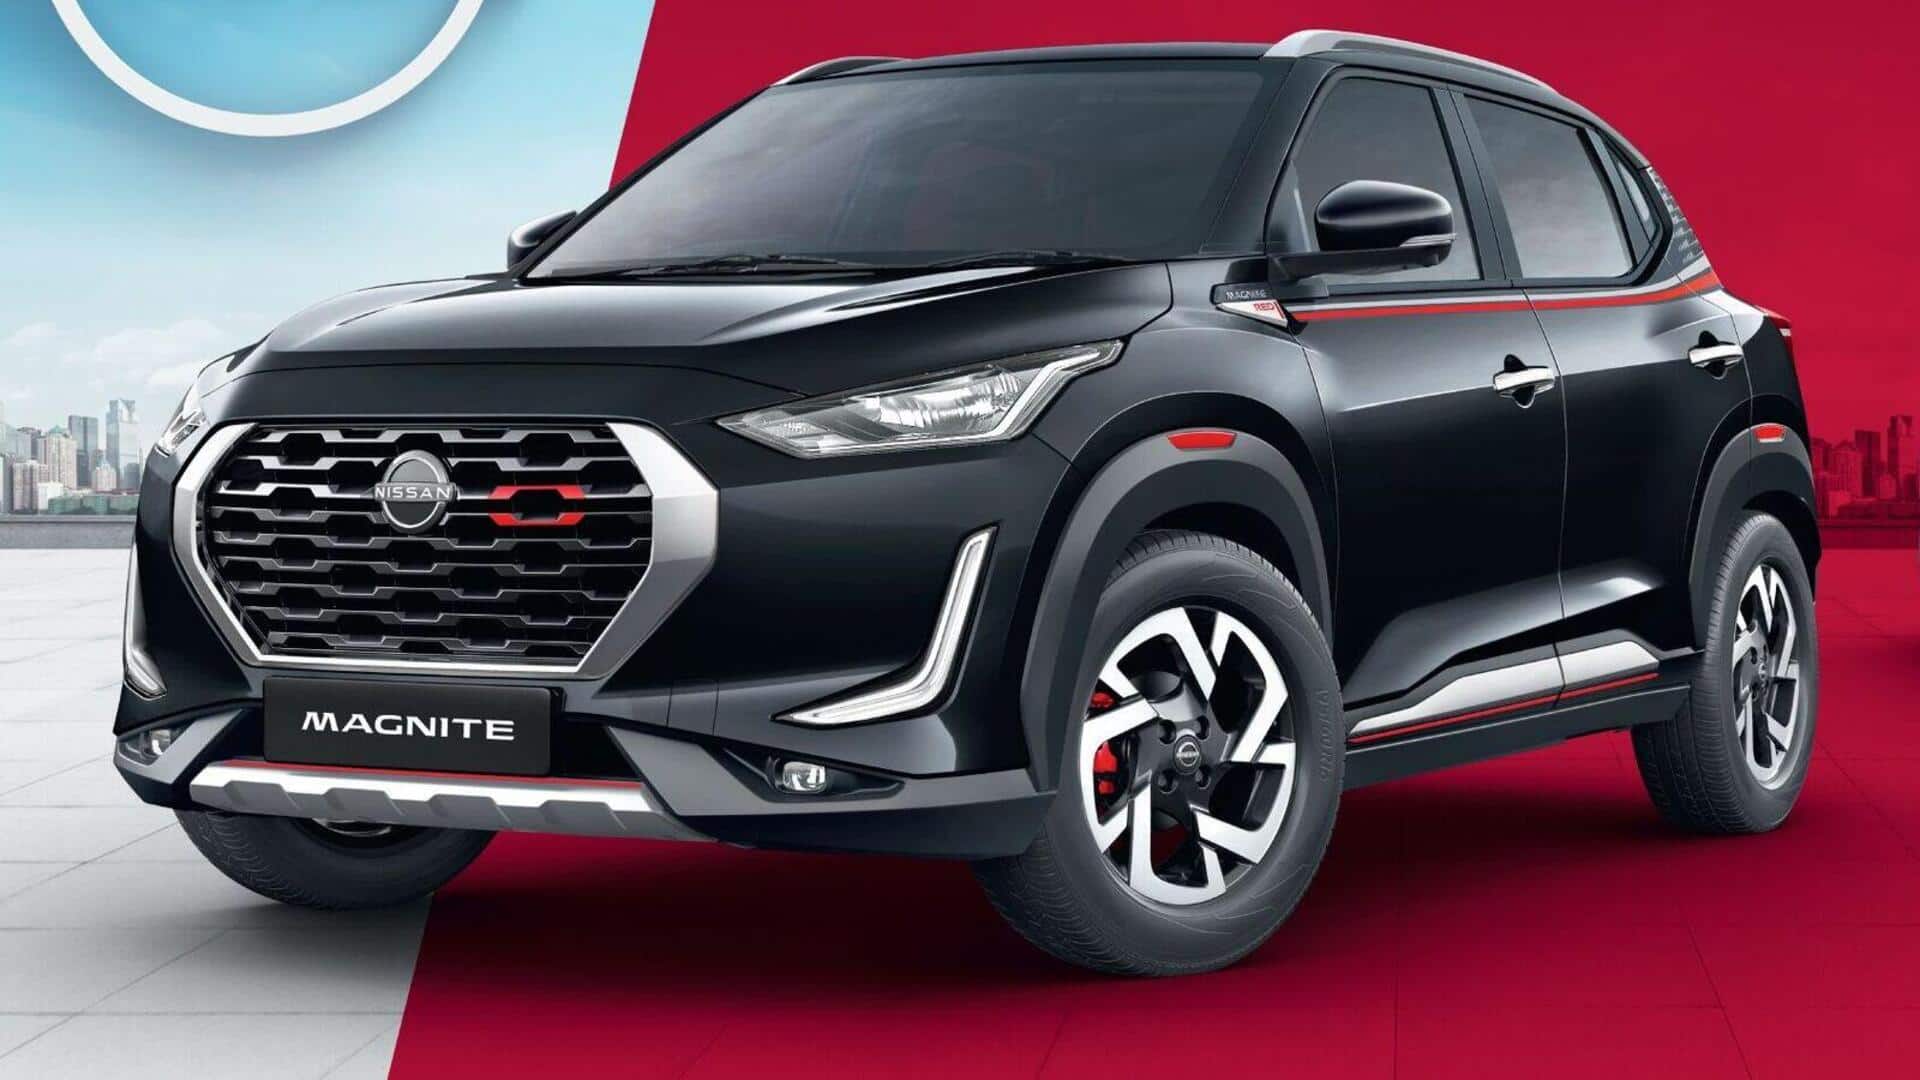 Nissan Magnite compact SUV hits new sales milestone in India